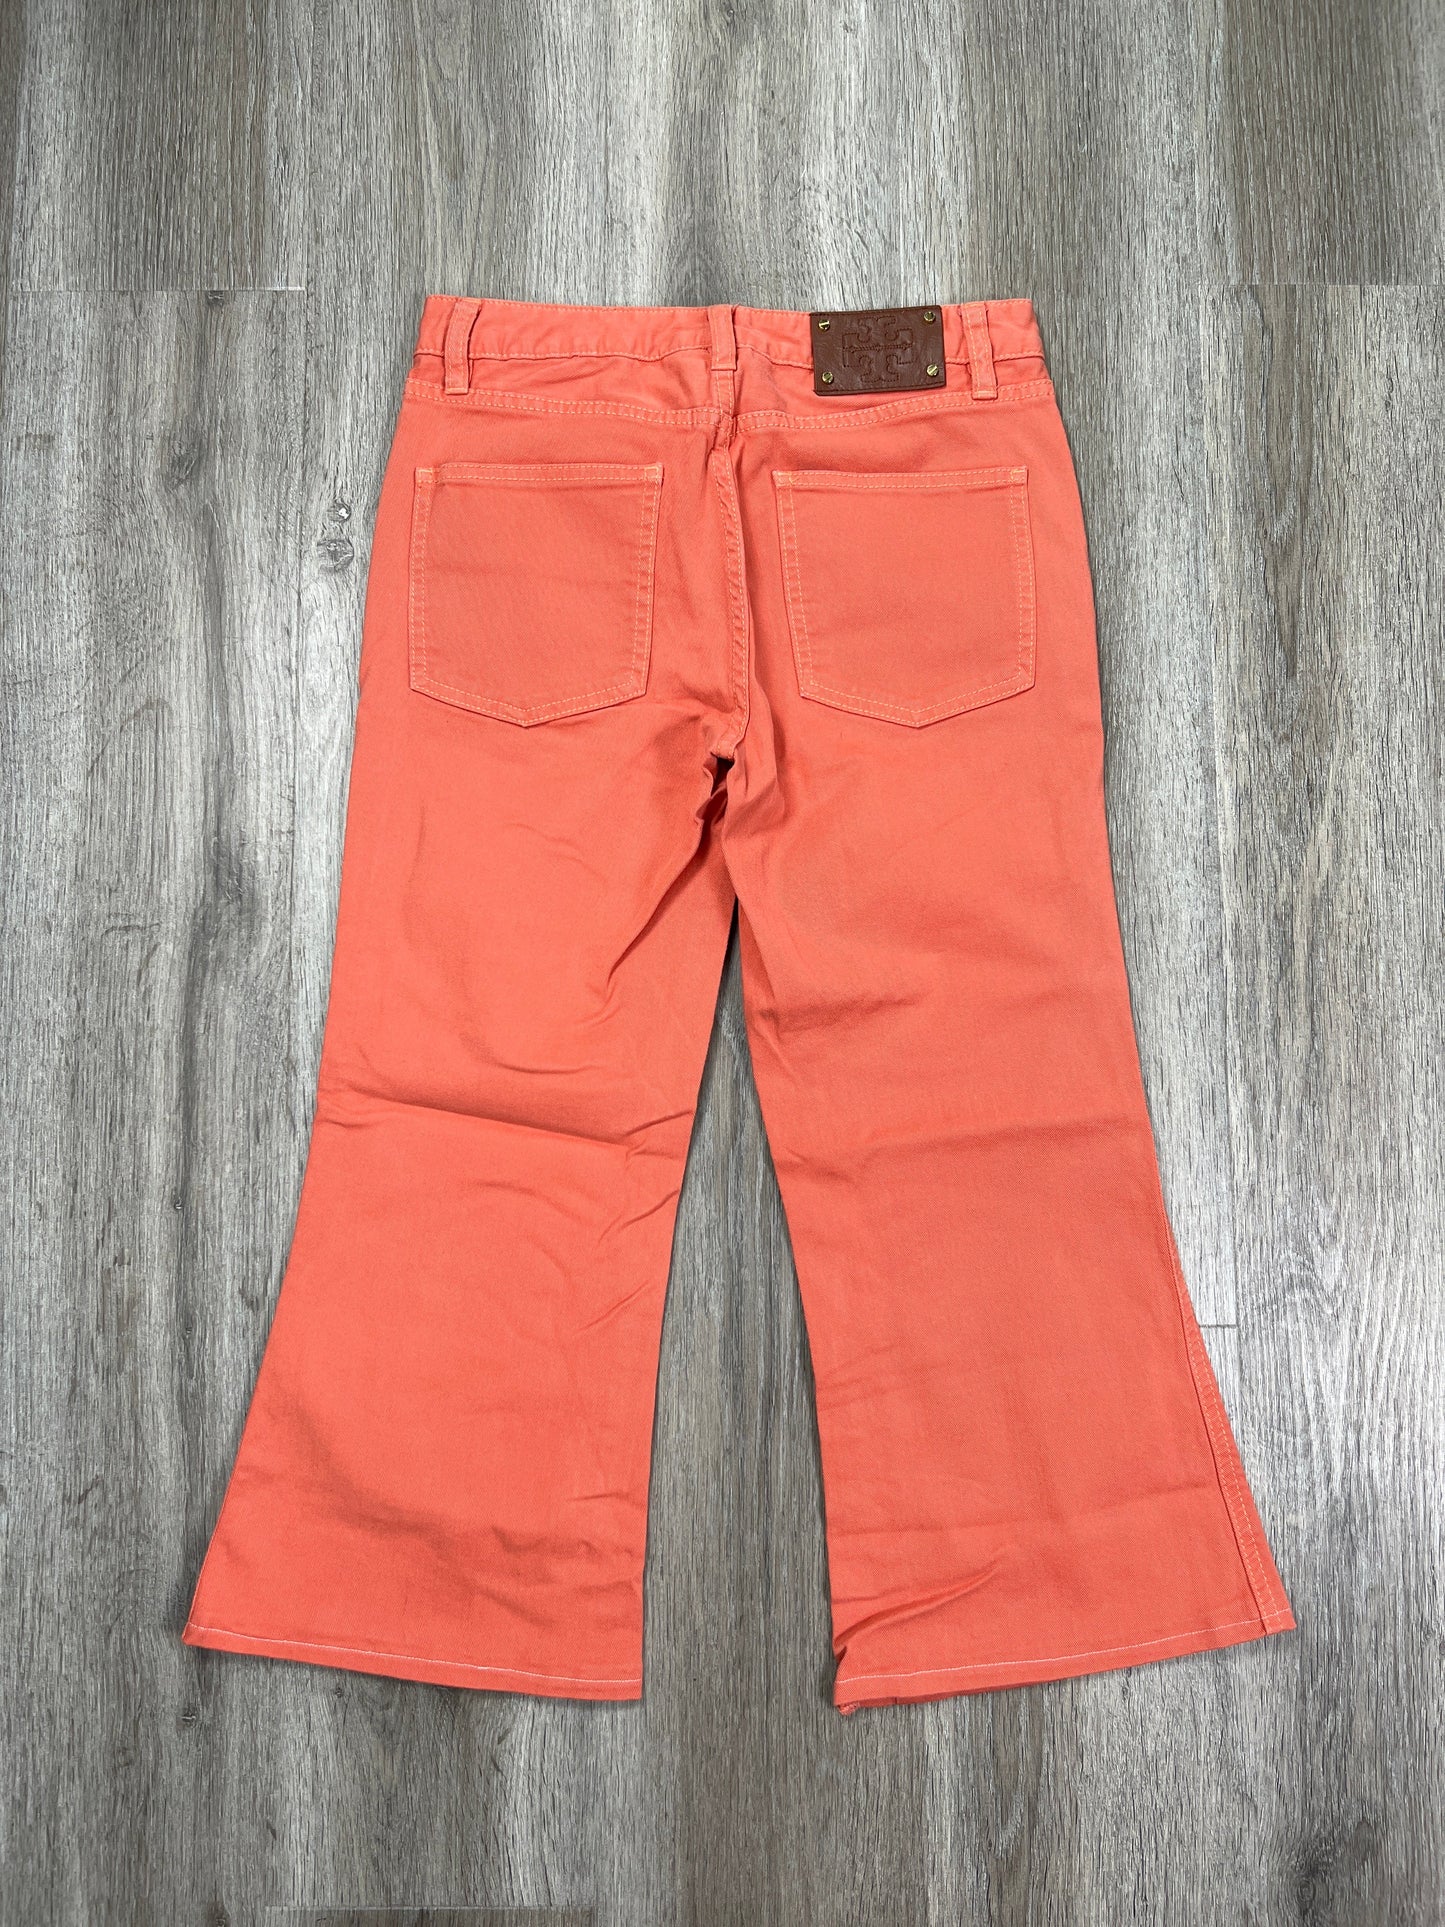 Orange Pants Cropped Tory Burch, Size S